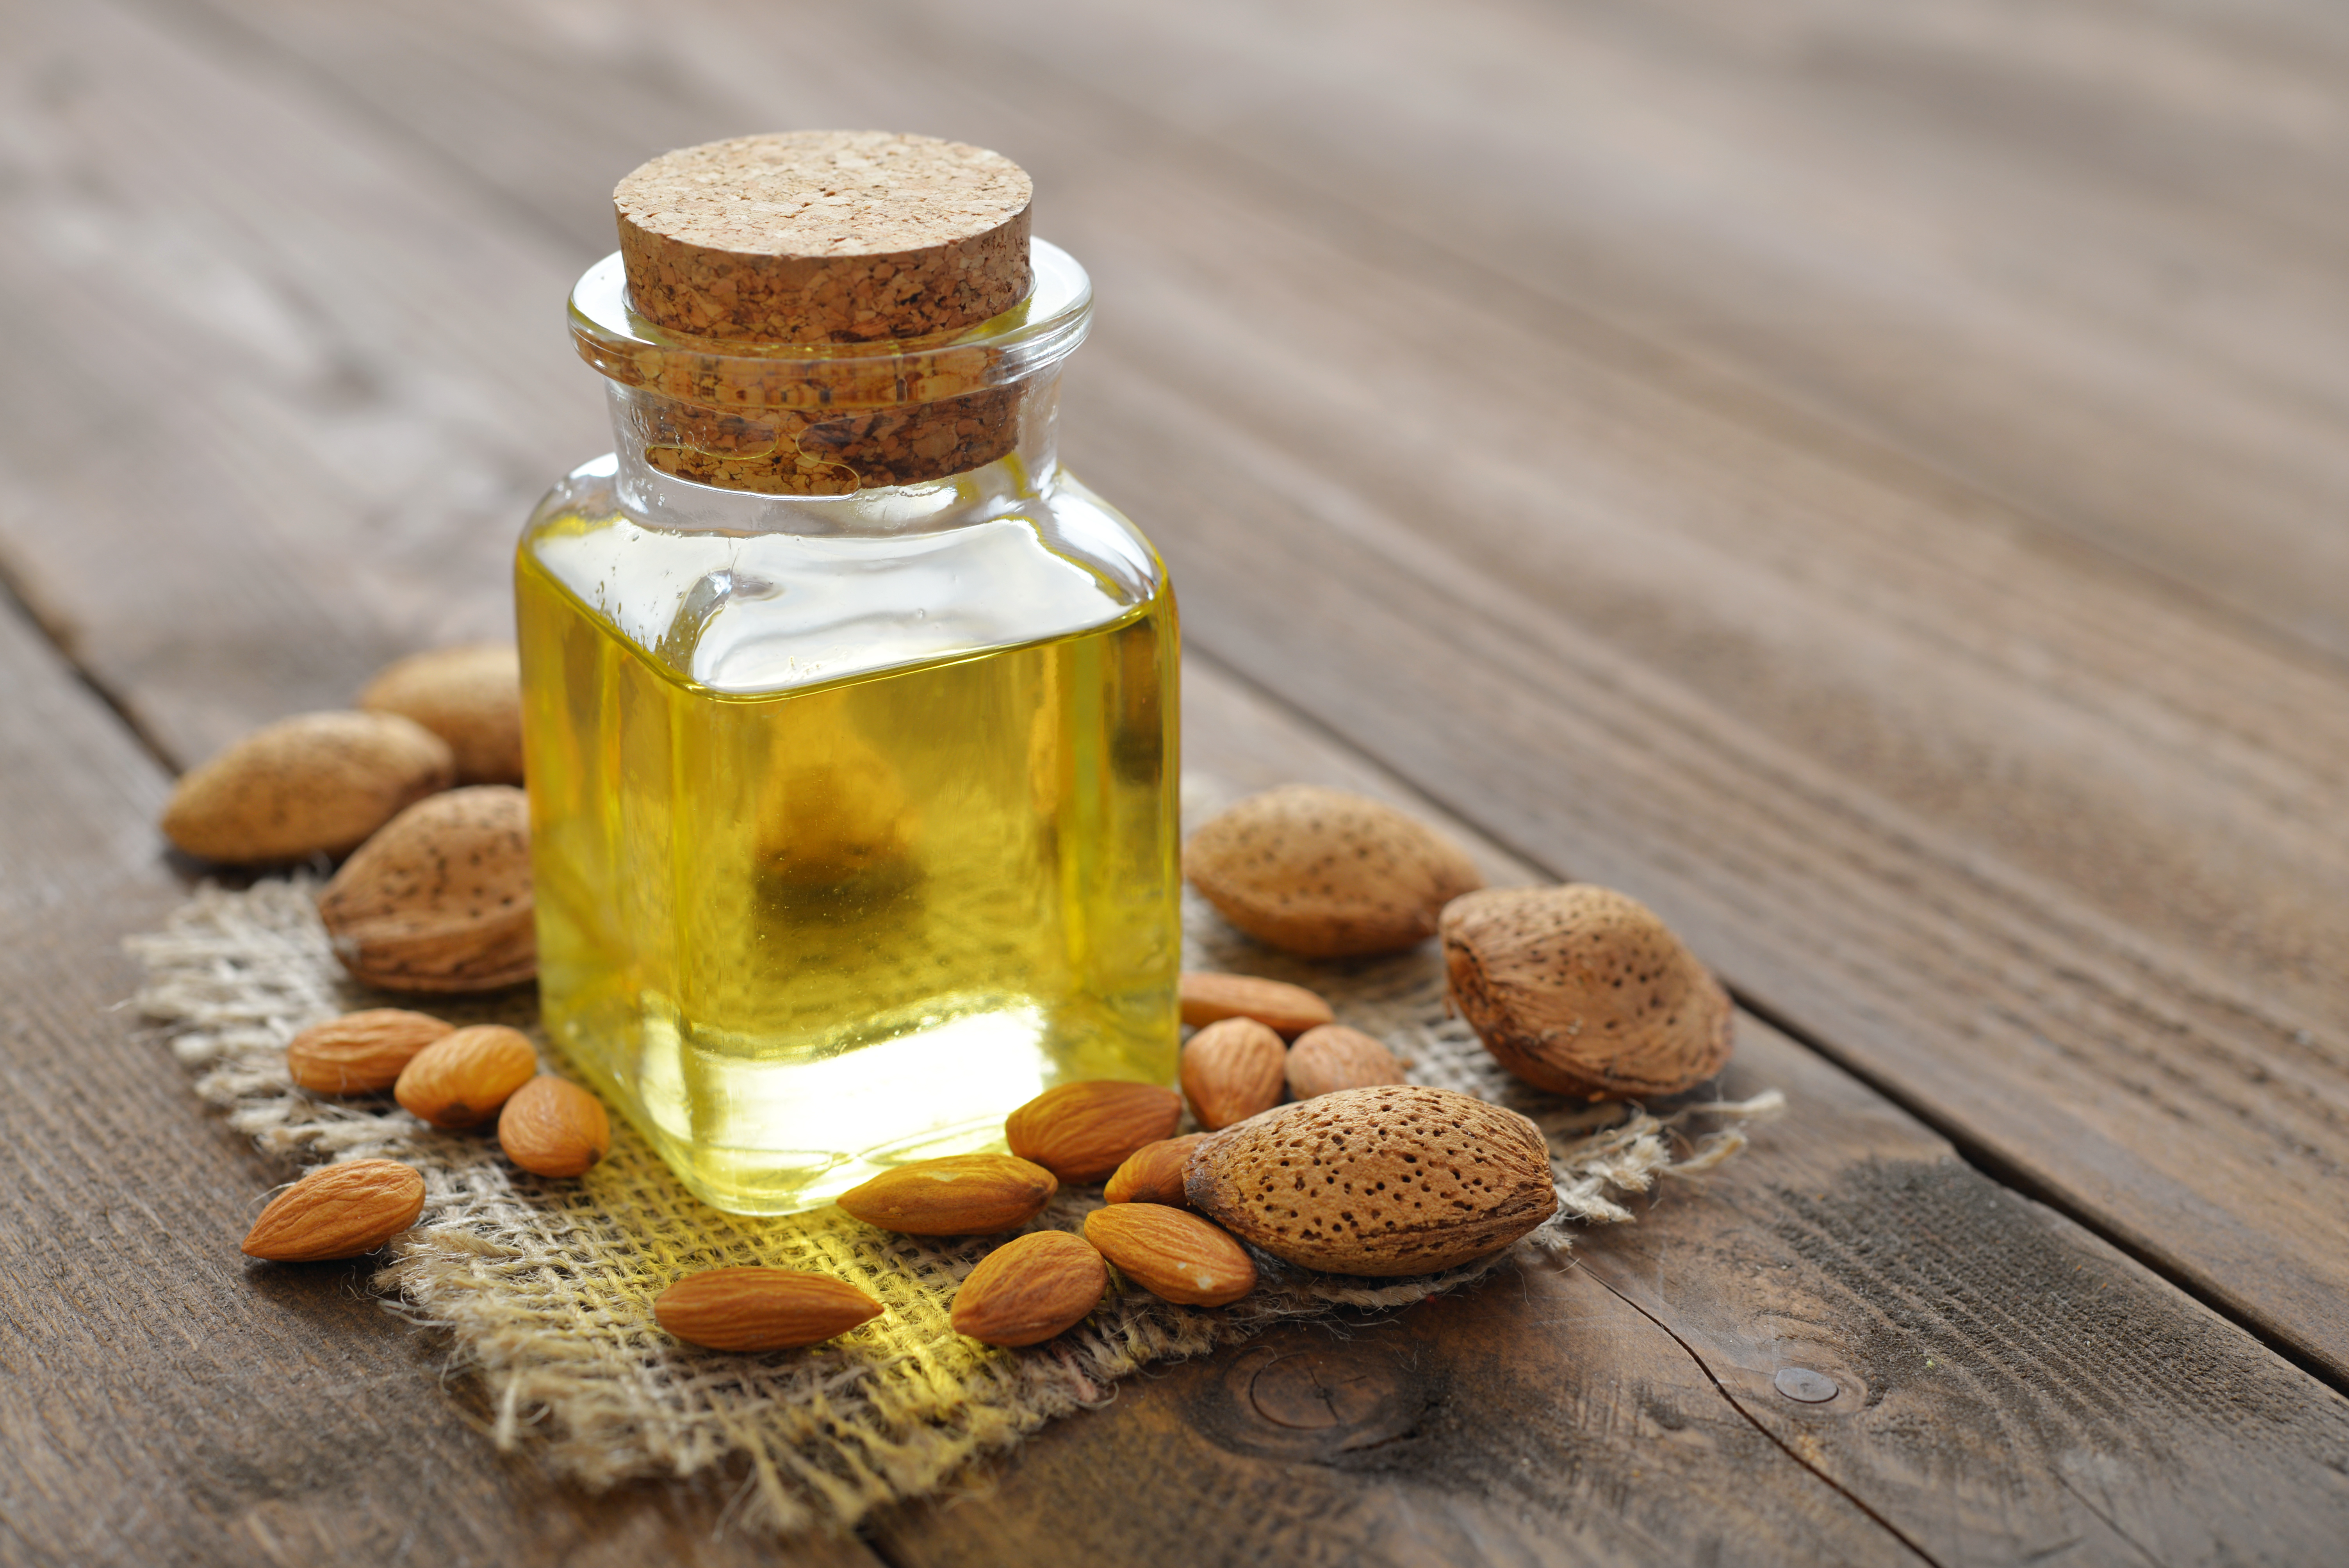 Bottle of almond oil